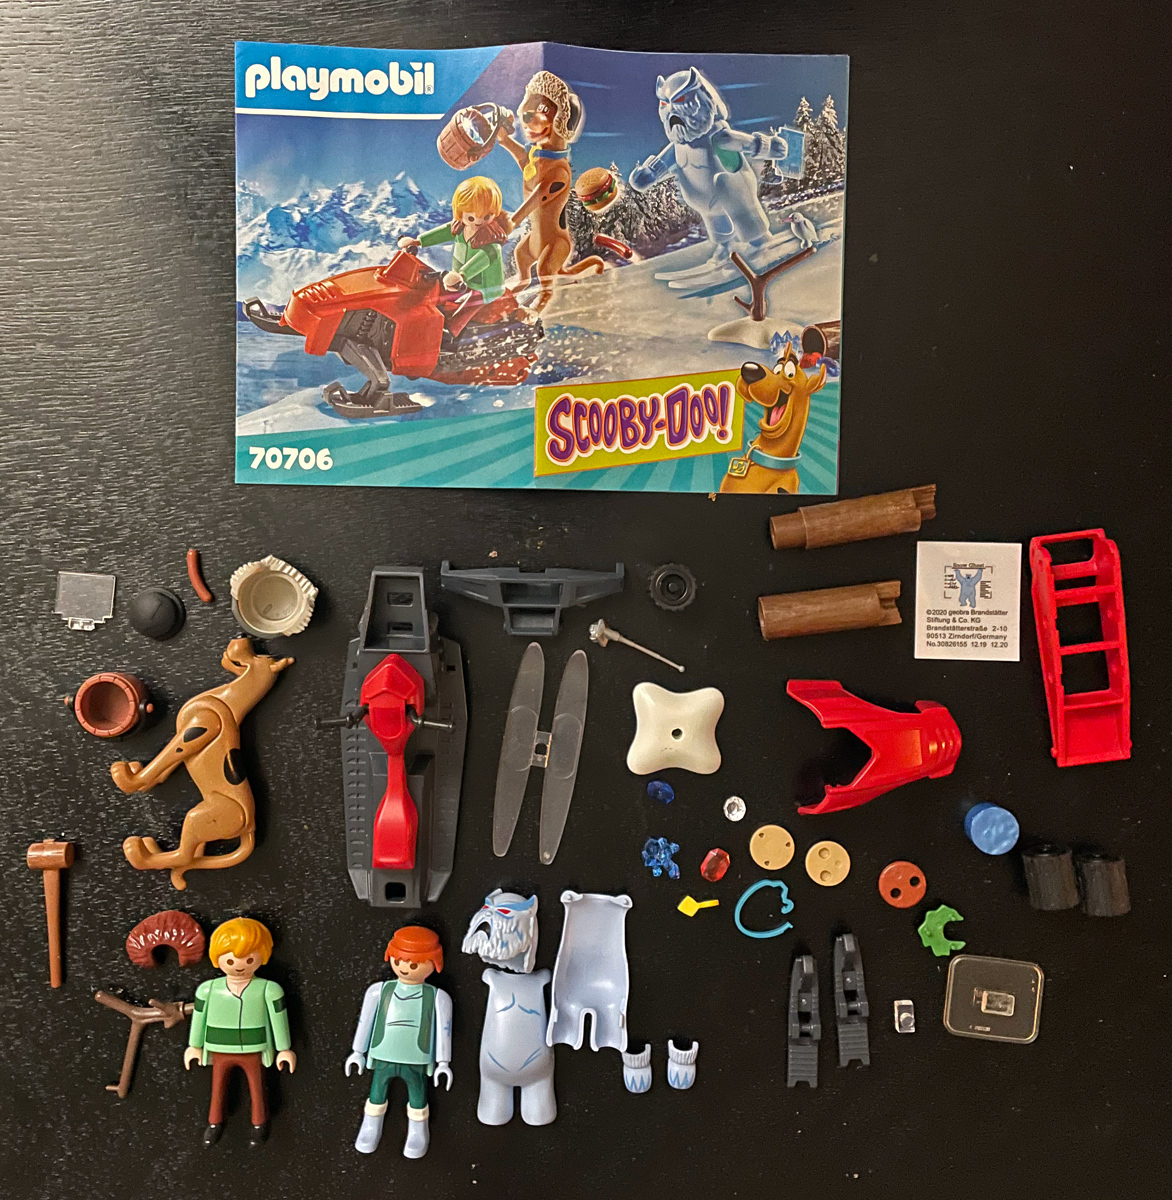 Playmobil - Scooby-Doo! Collectible Lifeguard Figure